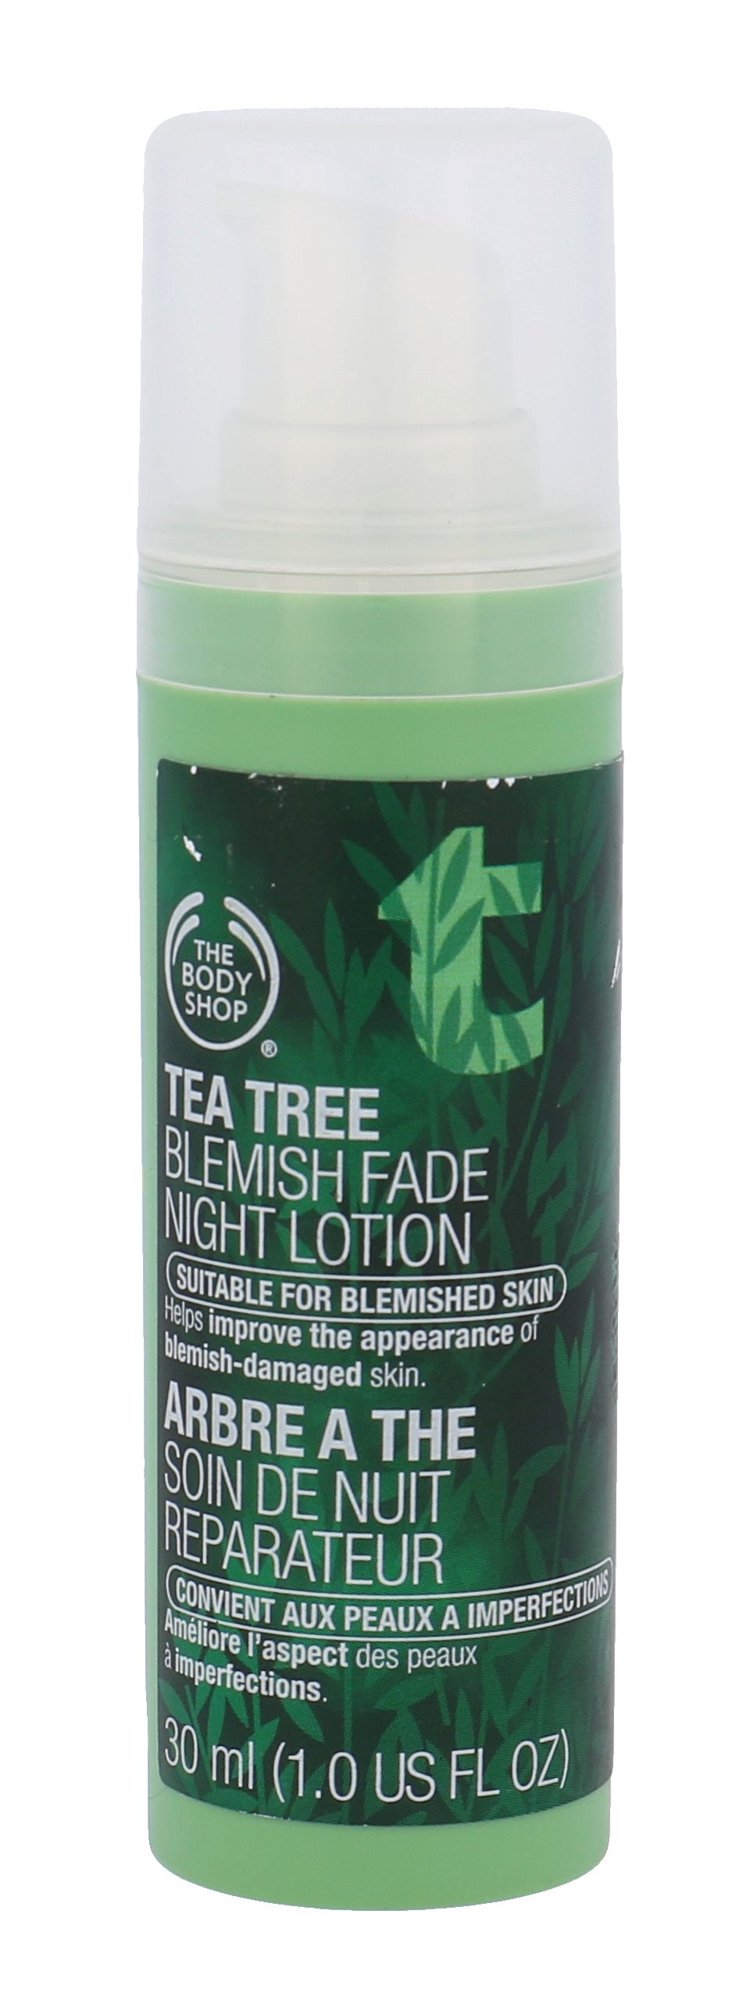 The Body Shop Tea Tree Blemish Fade Night Lotion